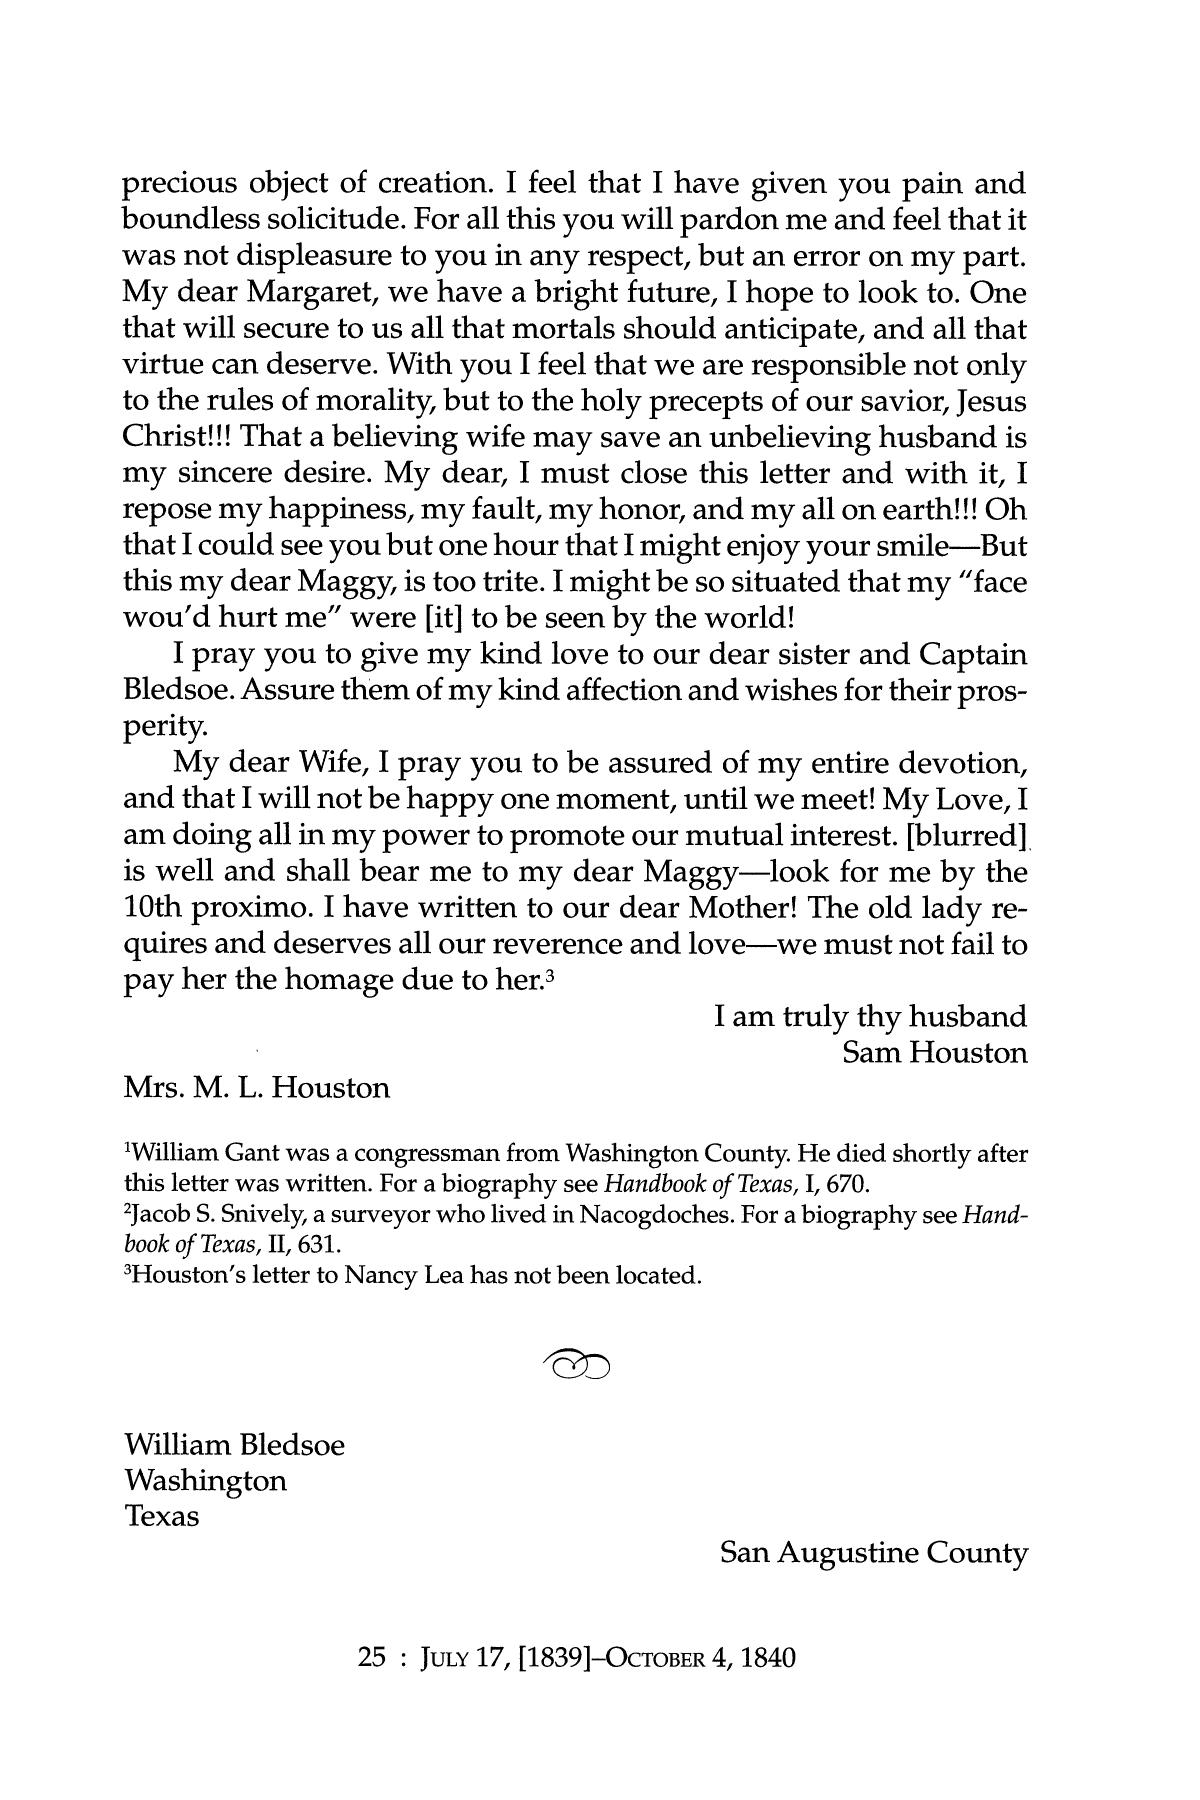 The Personal Correspondence of Sam Houston, Volume 1: 1839-1845
                                                
                                                    25
                                                